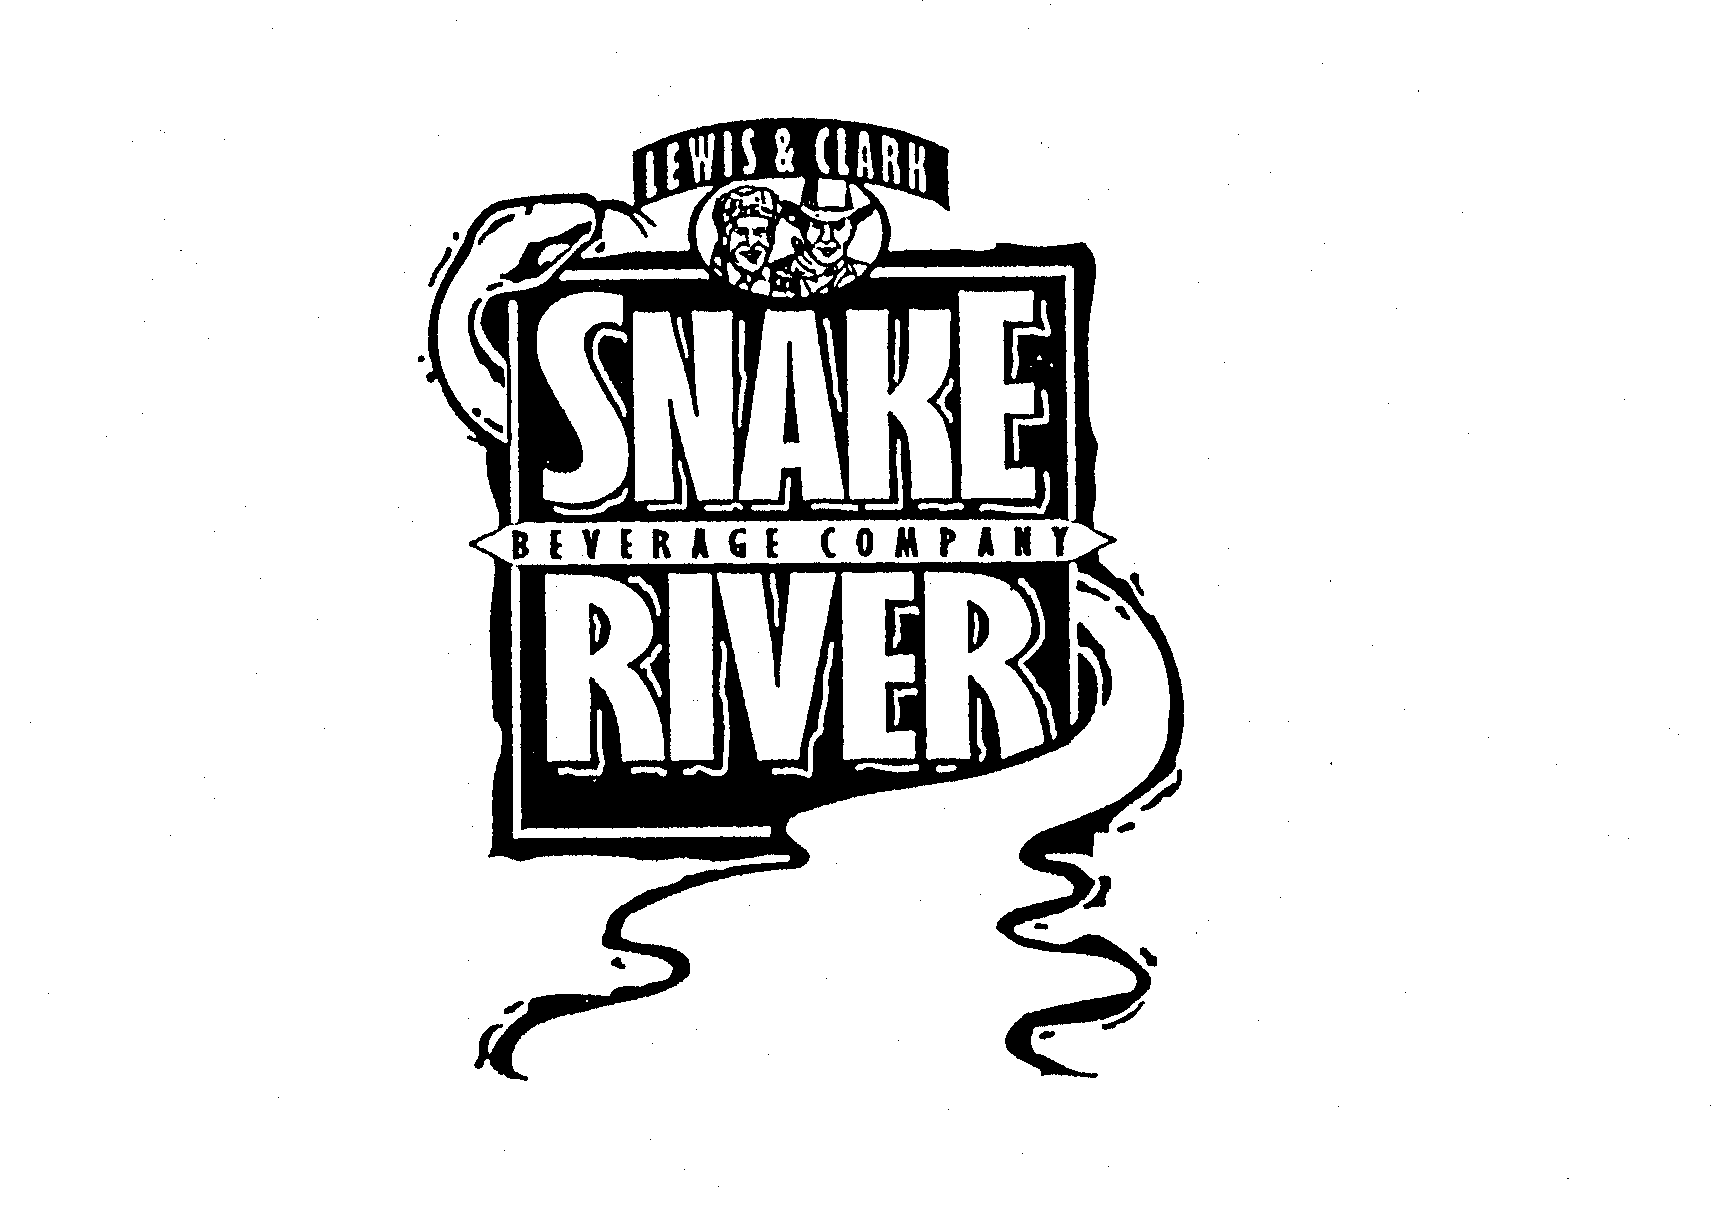 Trademark Logo LEWIS & CLARK SNAKE RIVER BEVERAGE COMPANY